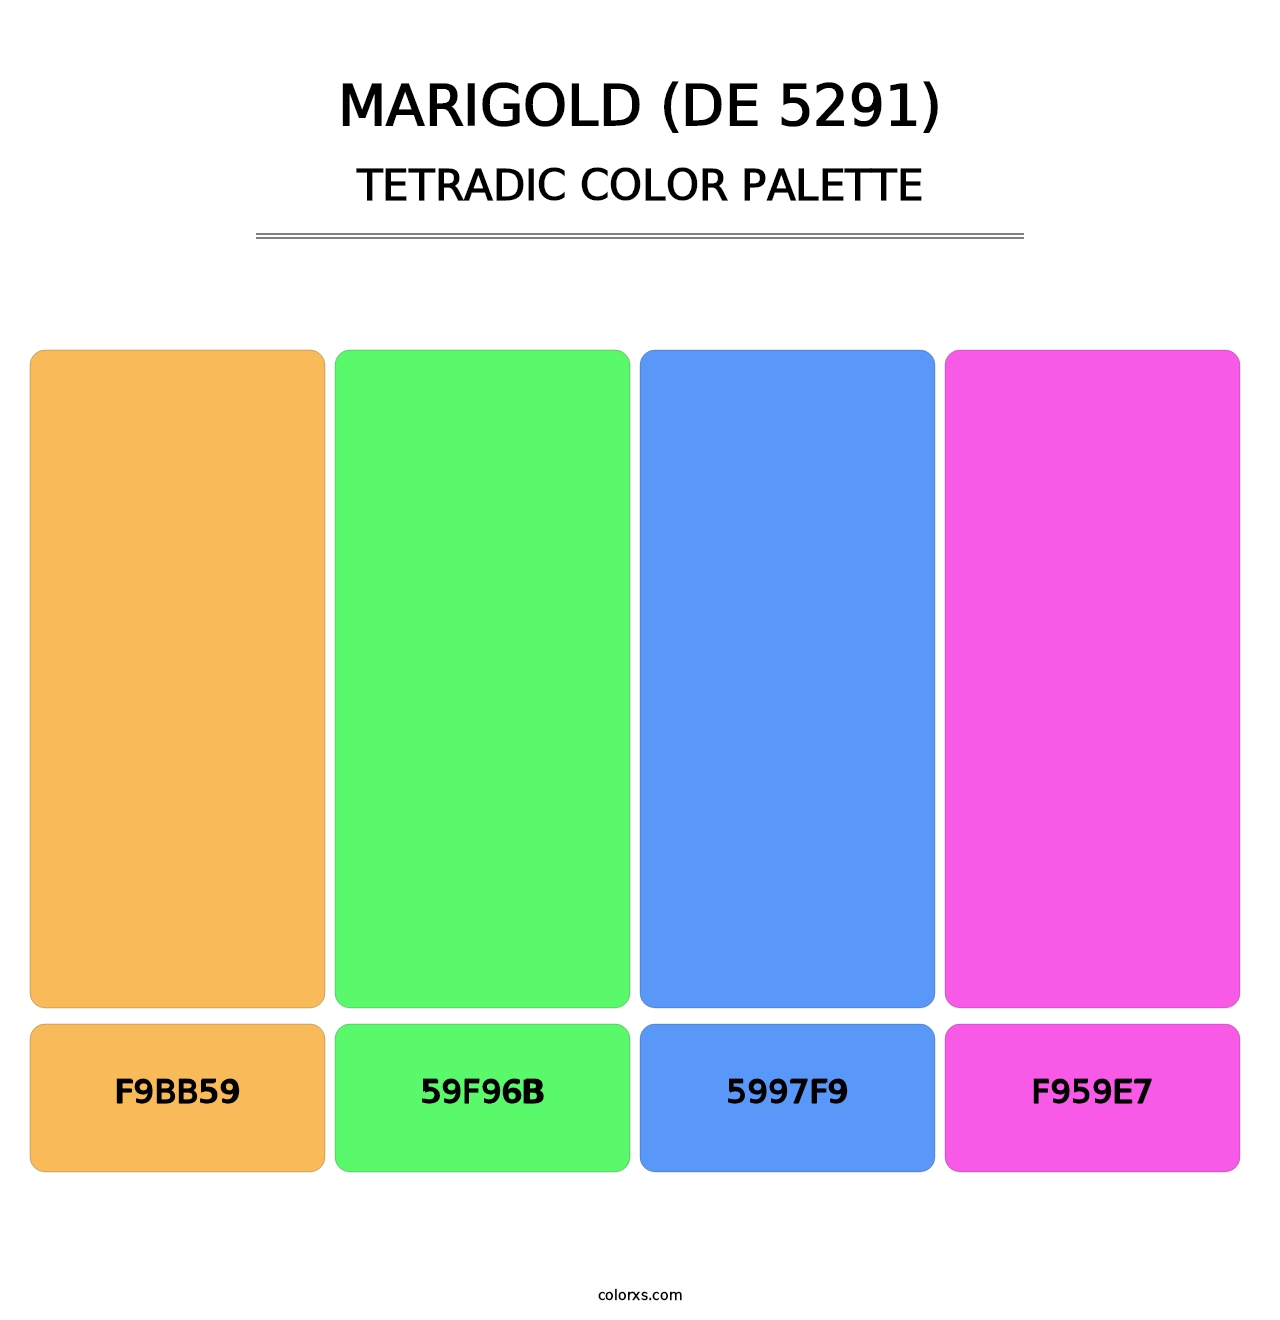 Marigold (DE 5291) - Tetradic Color Palette